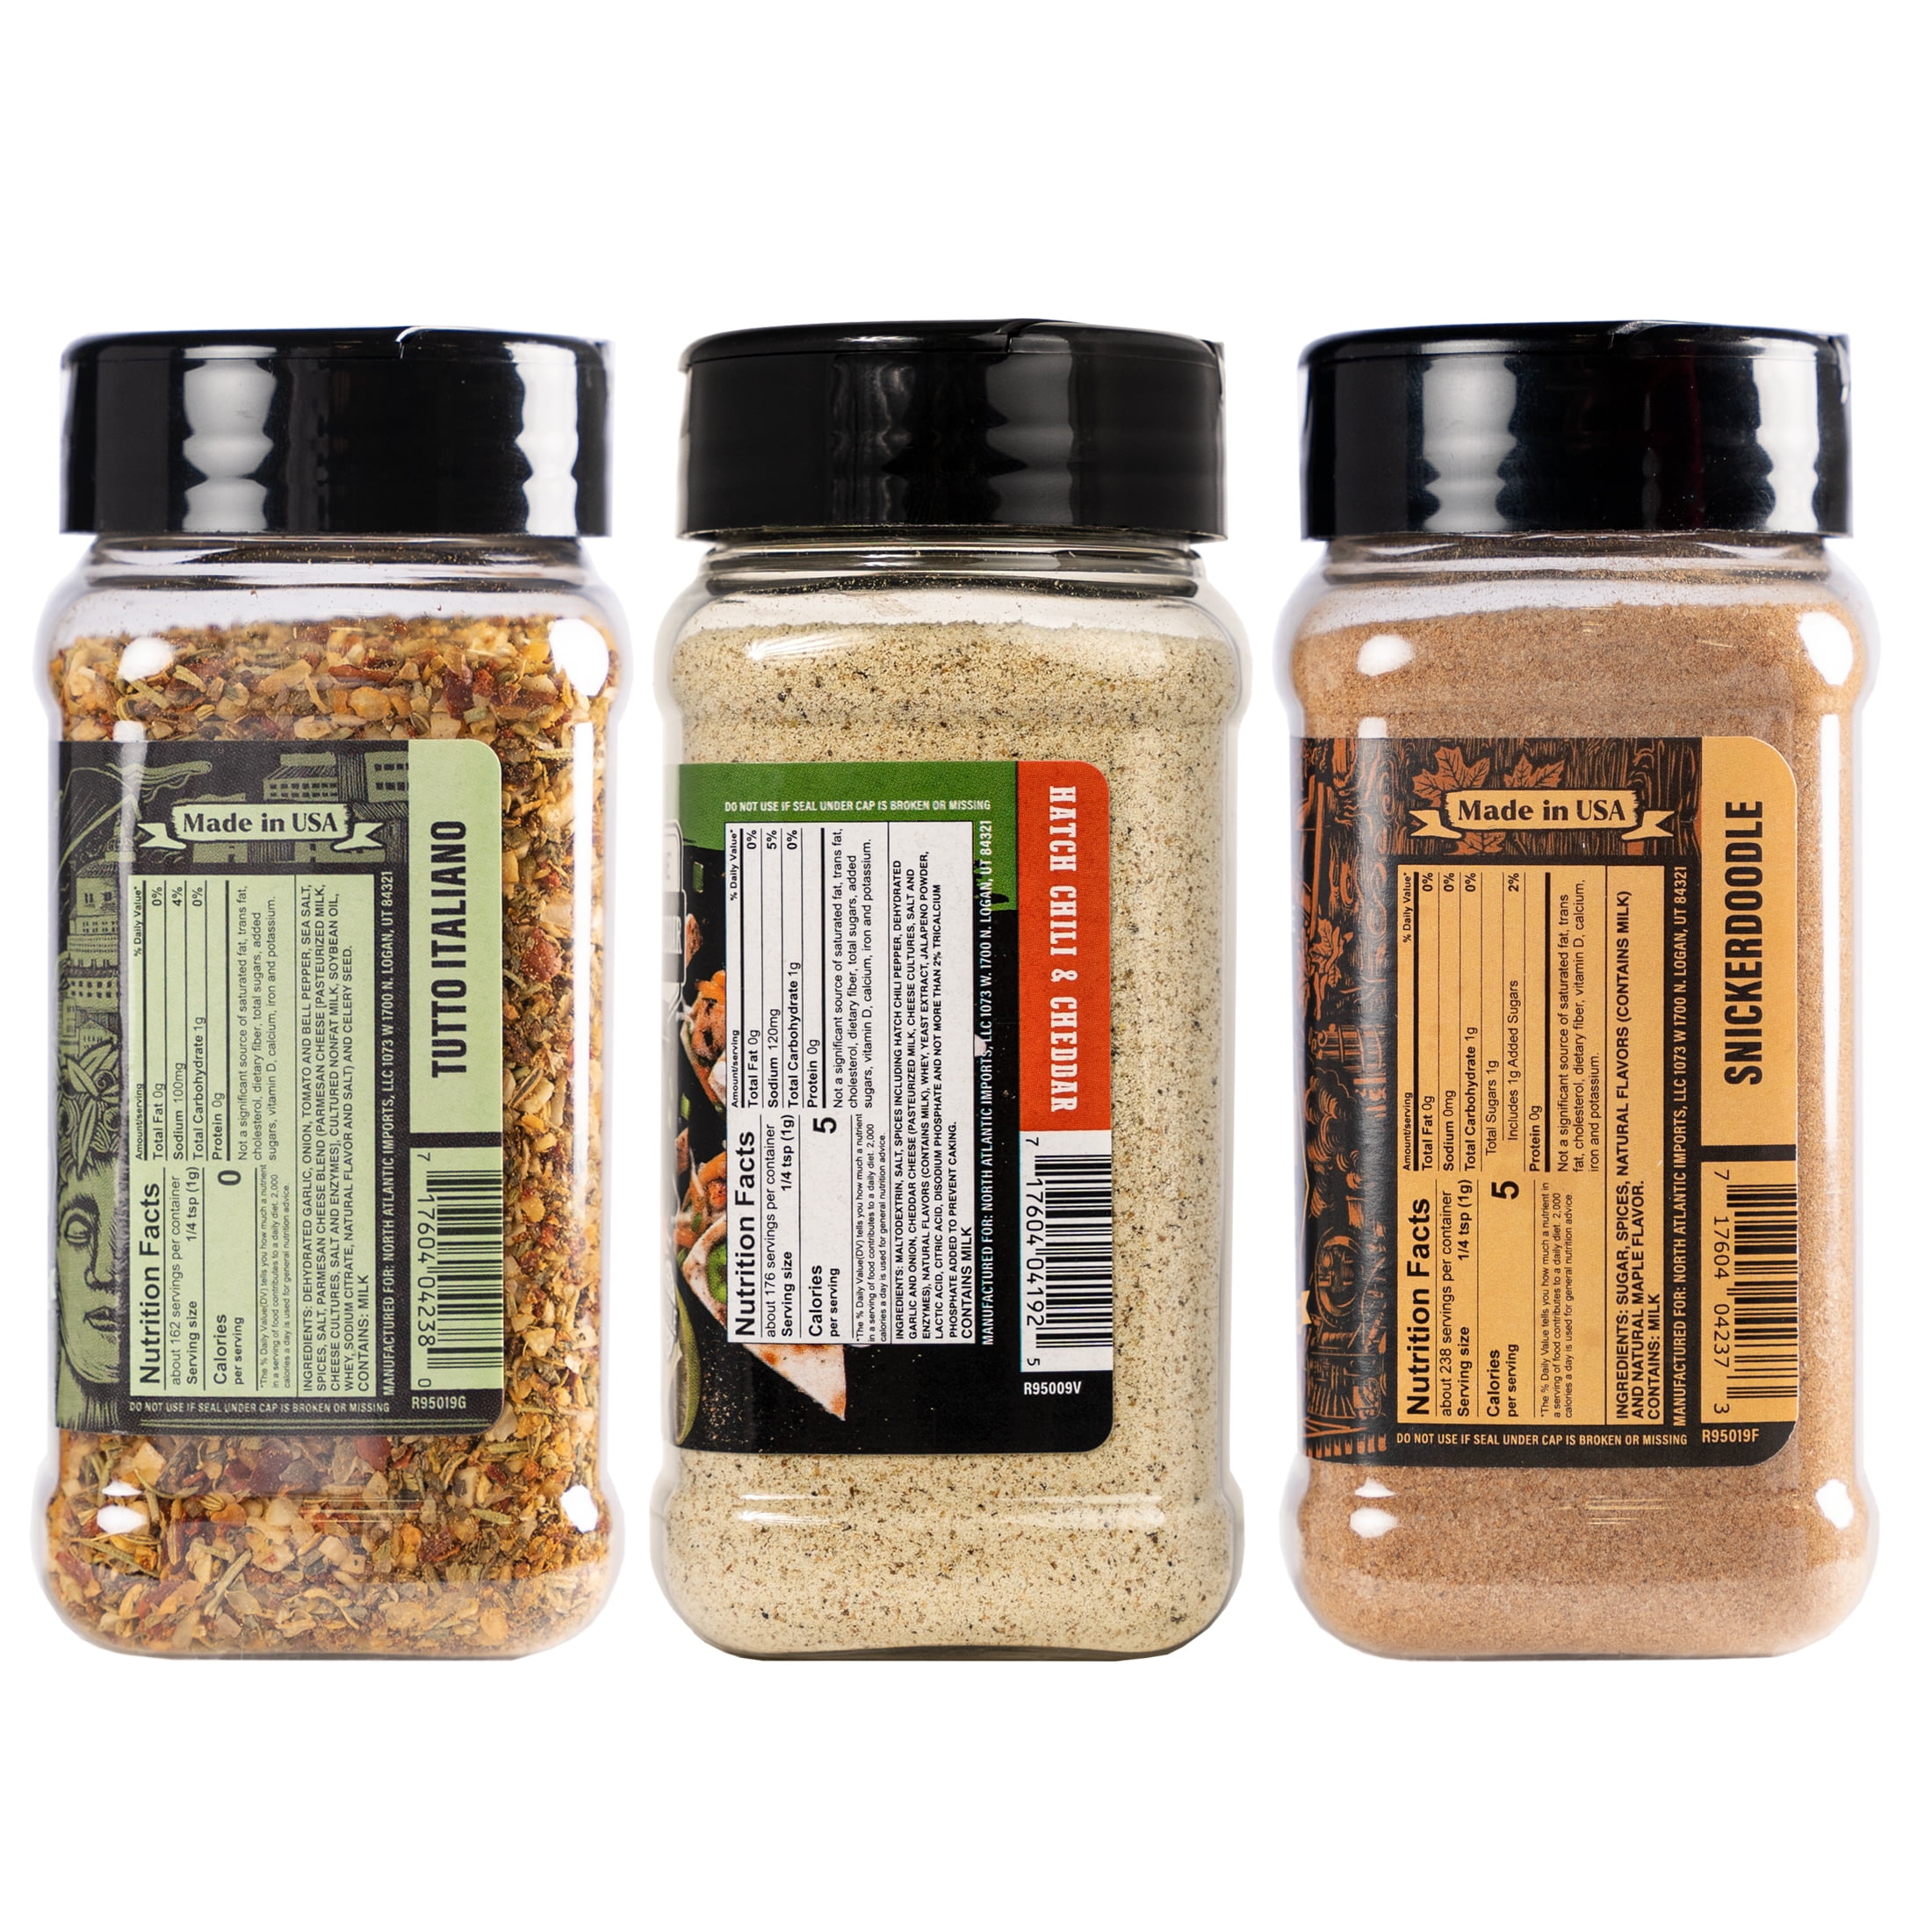 Blackstone Specialty Savory Dry Mix Spice Gift Set, 31.6 oz